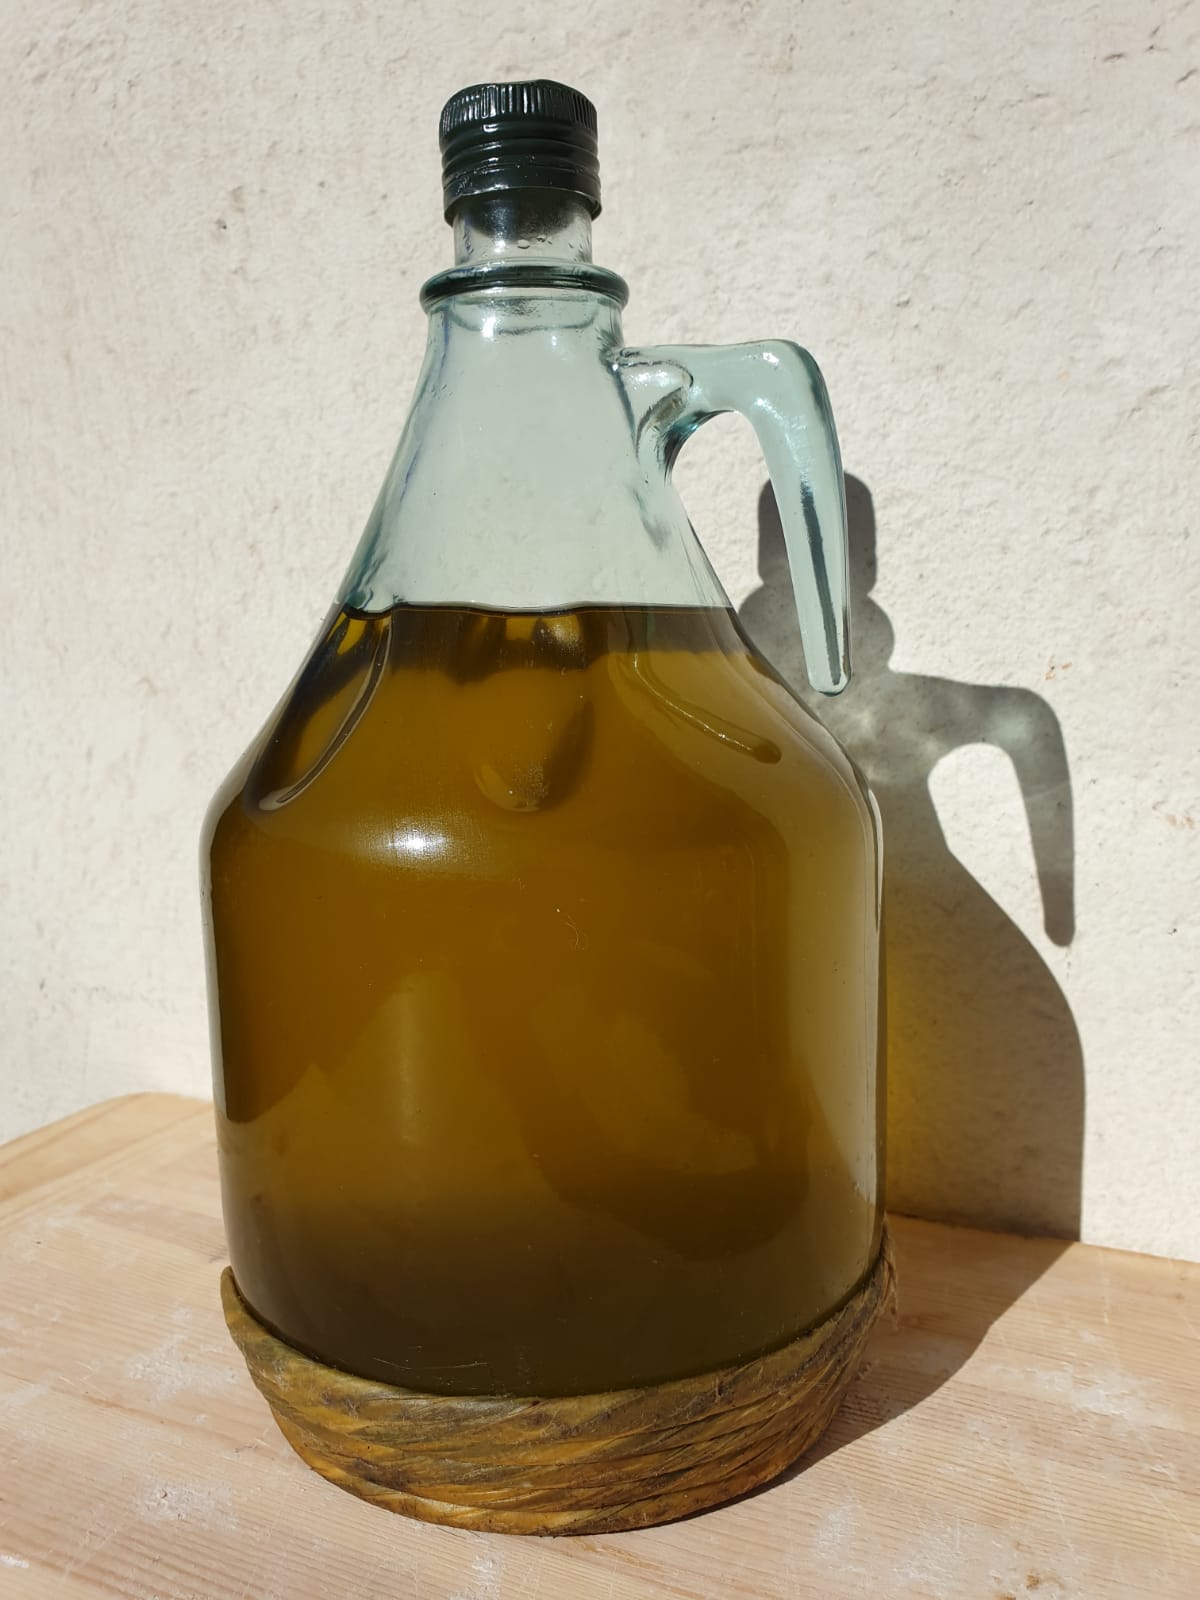 Olio extravergina d'oliva IGP Toscano - I Piaceri della Maremma